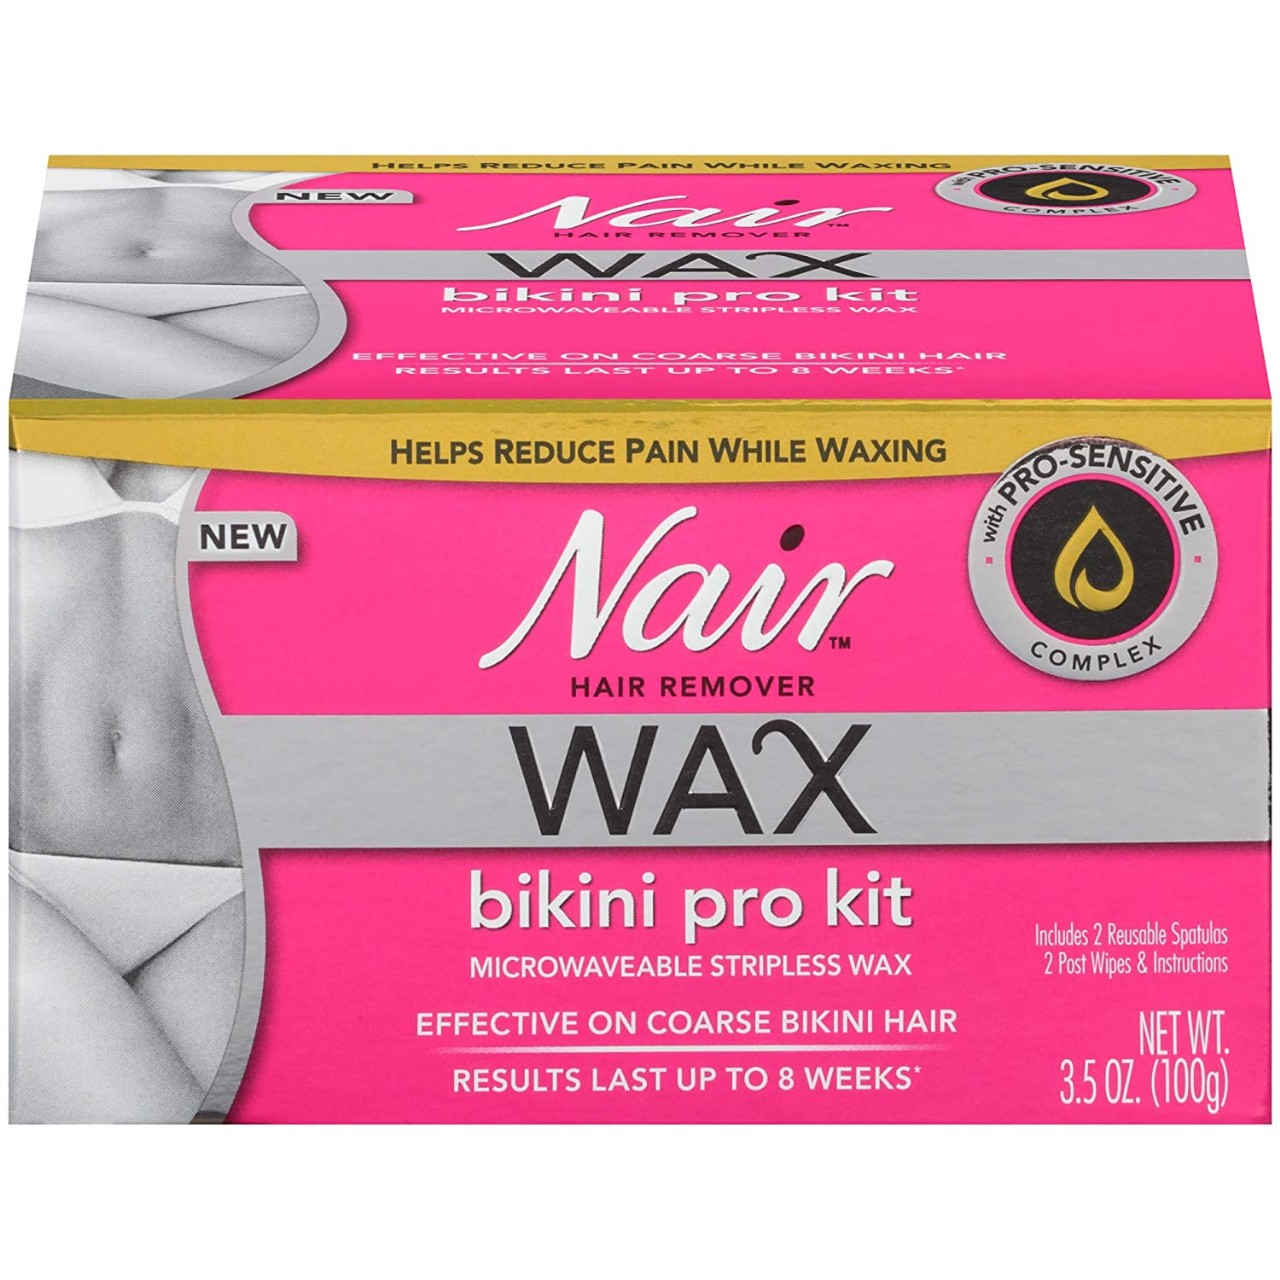 Nair Hair Remover Wax Bikini Pro Kit